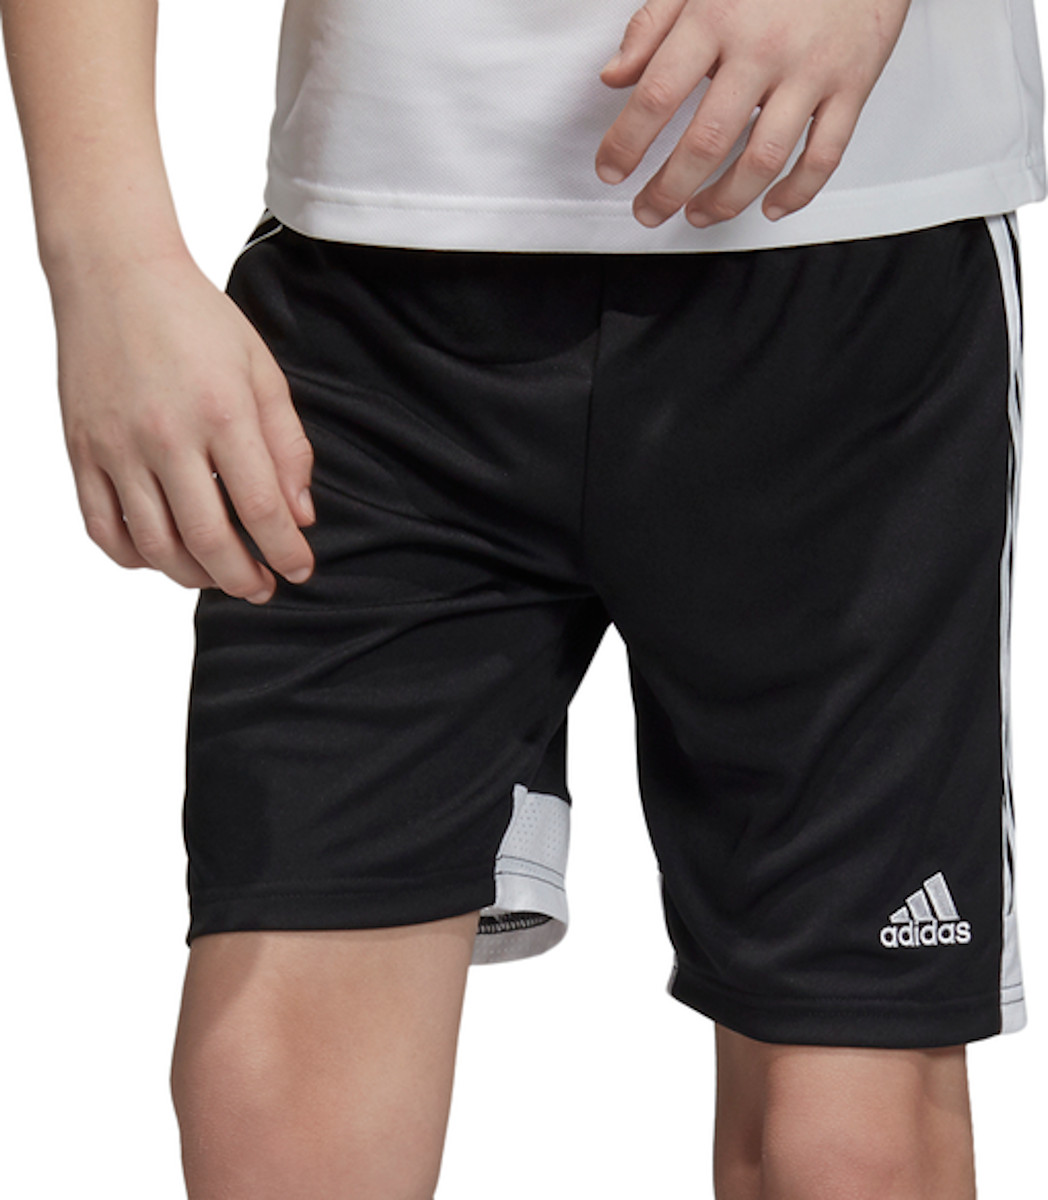 Coordinate grip Consecutive adidas shorts tastigo 19, sell big UP TO 86% OFF - research.sjp.ac.lk